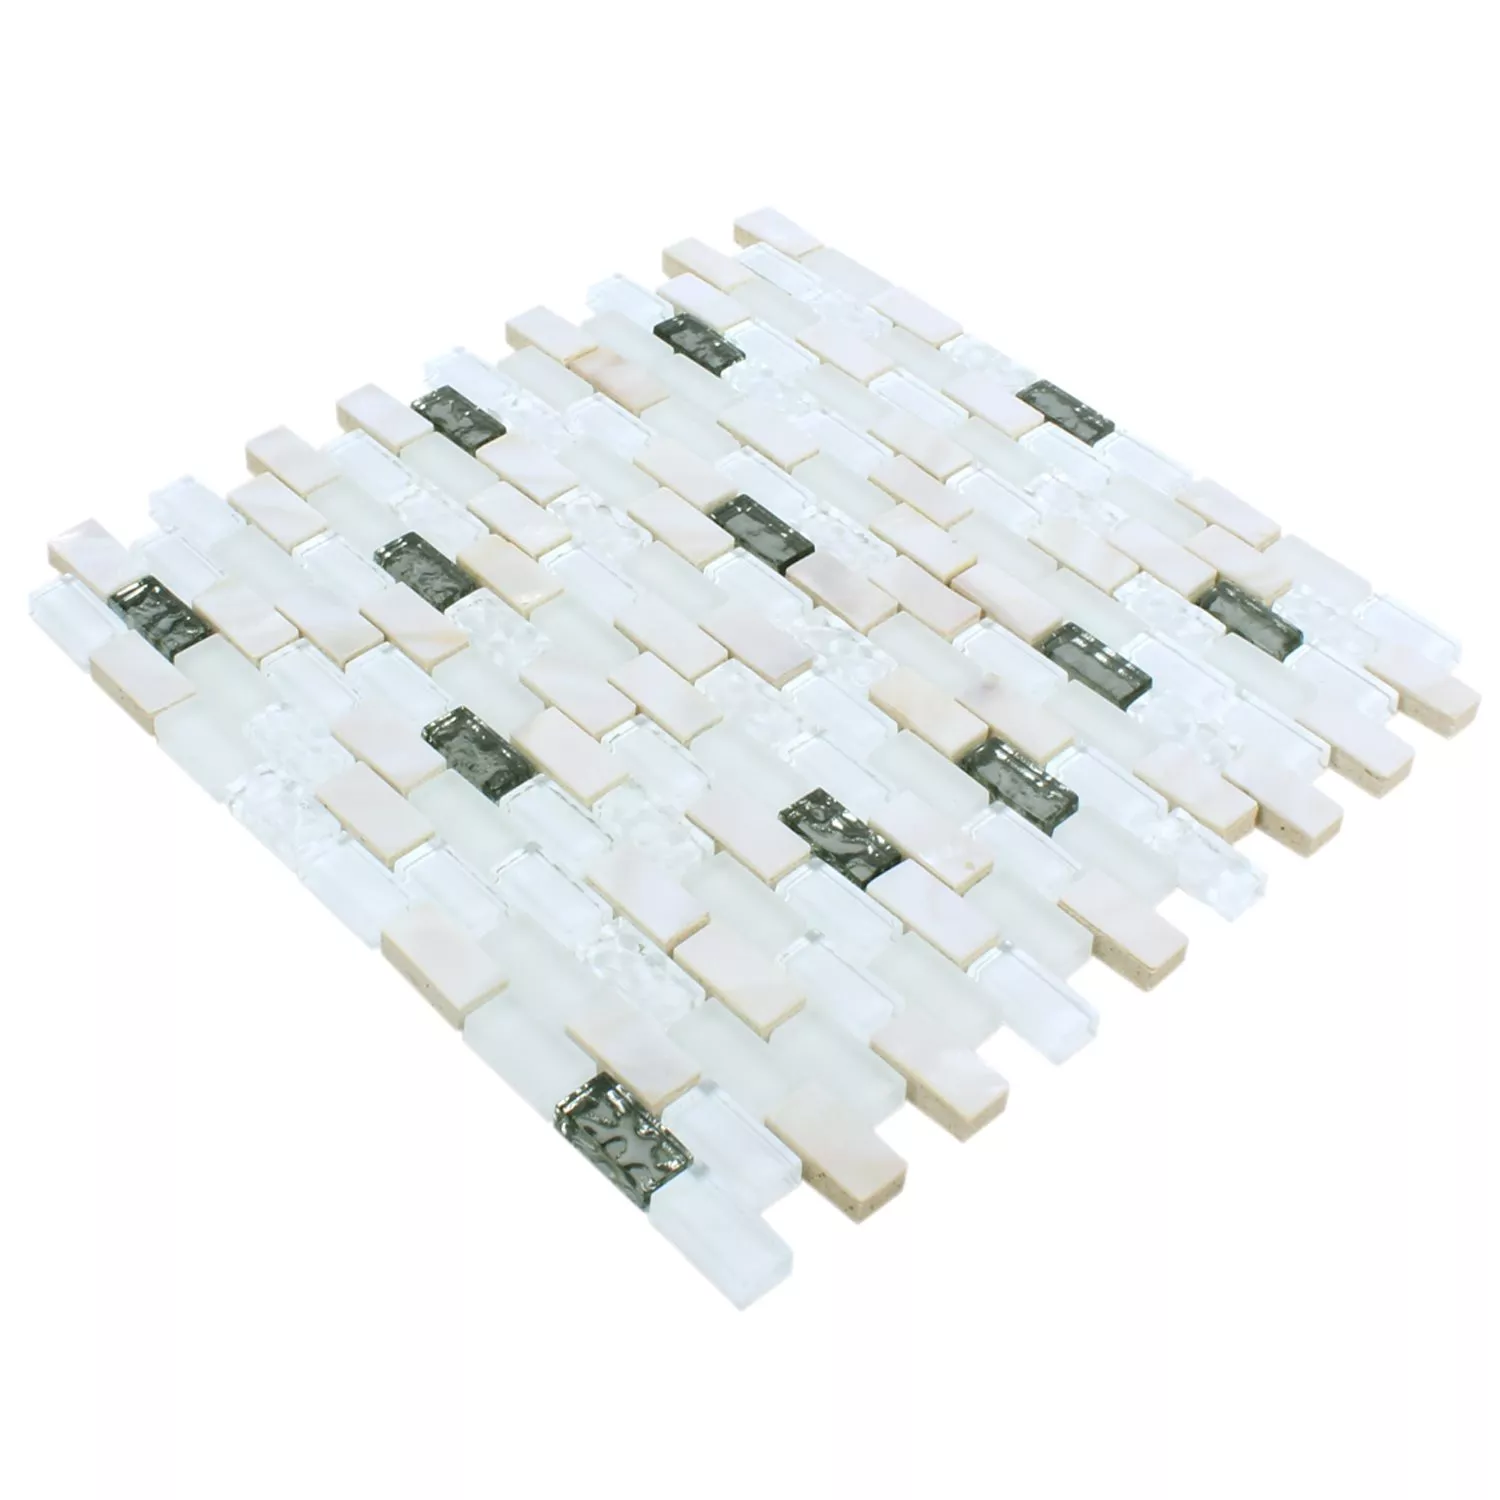 Sample Mosaic Tiles Saltanat White